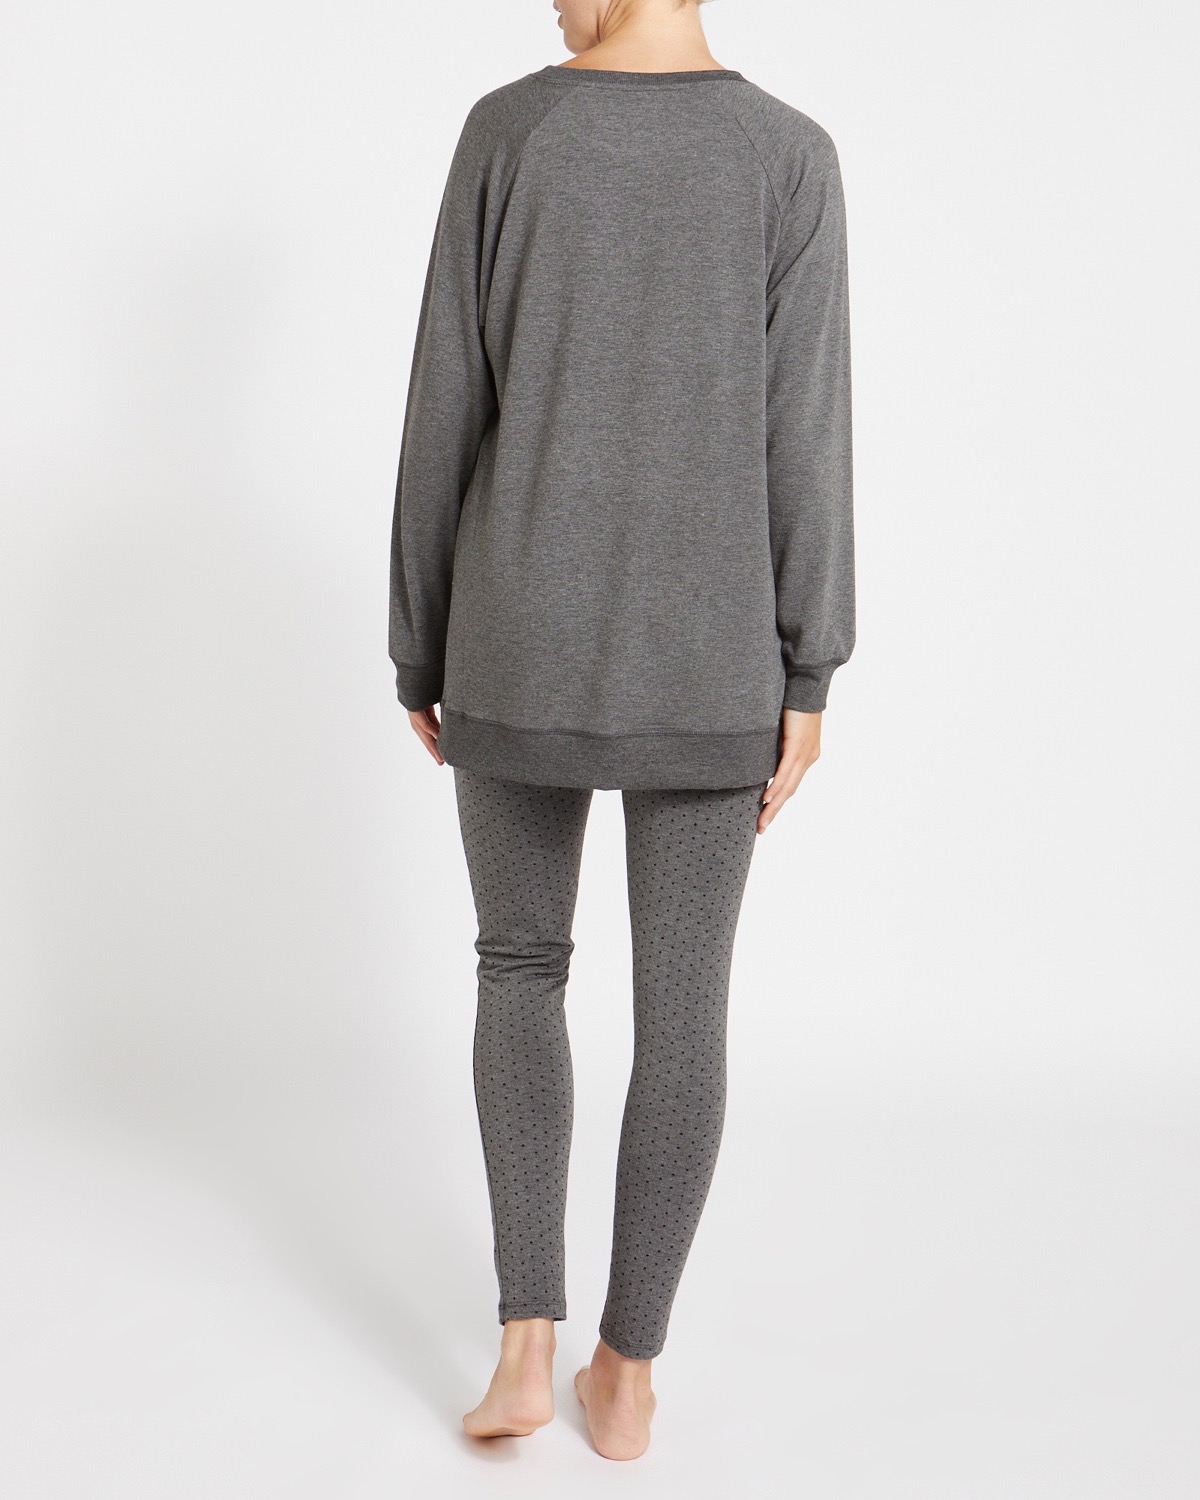 Dunnes Stores  Black Oversized Sweatshirt And Leggings Pyjamas Set